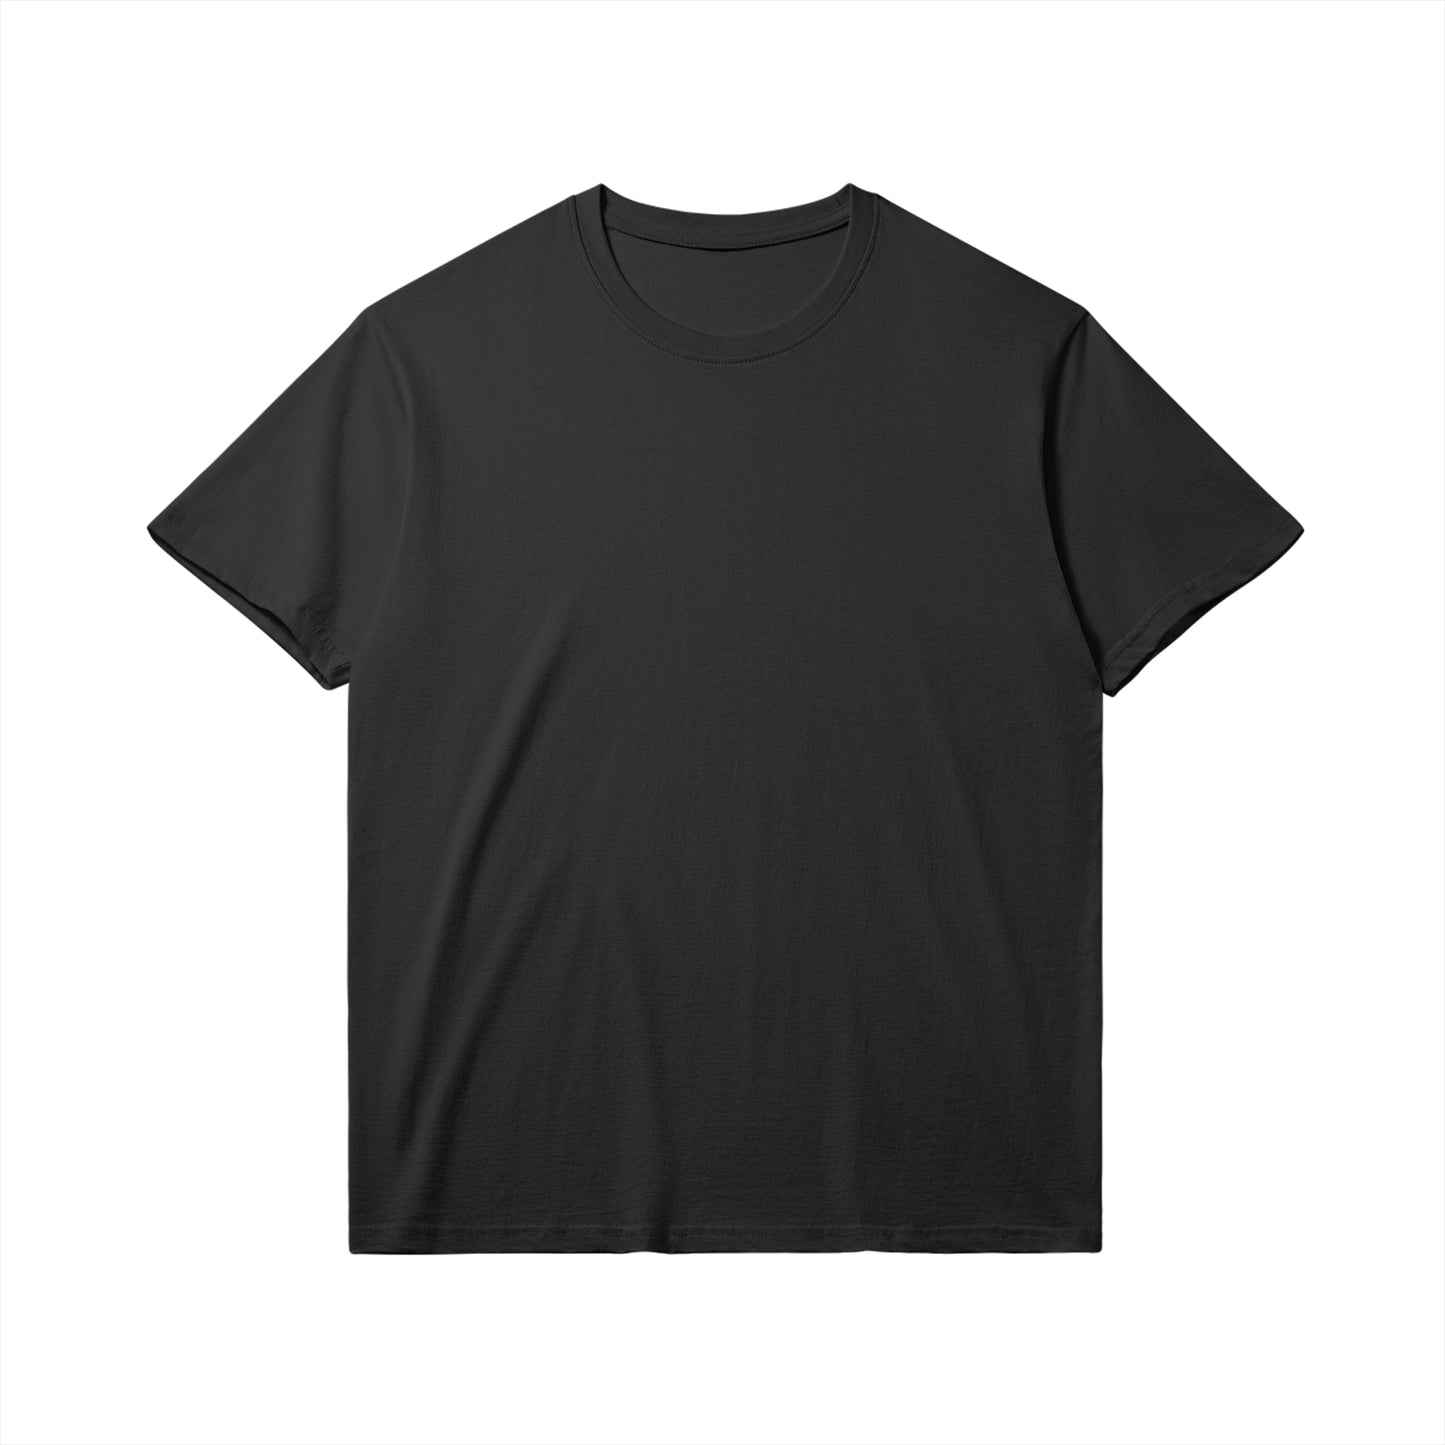 XO SMILE (BACK PRINT) - Unisex Lightweight Classic T-shirt